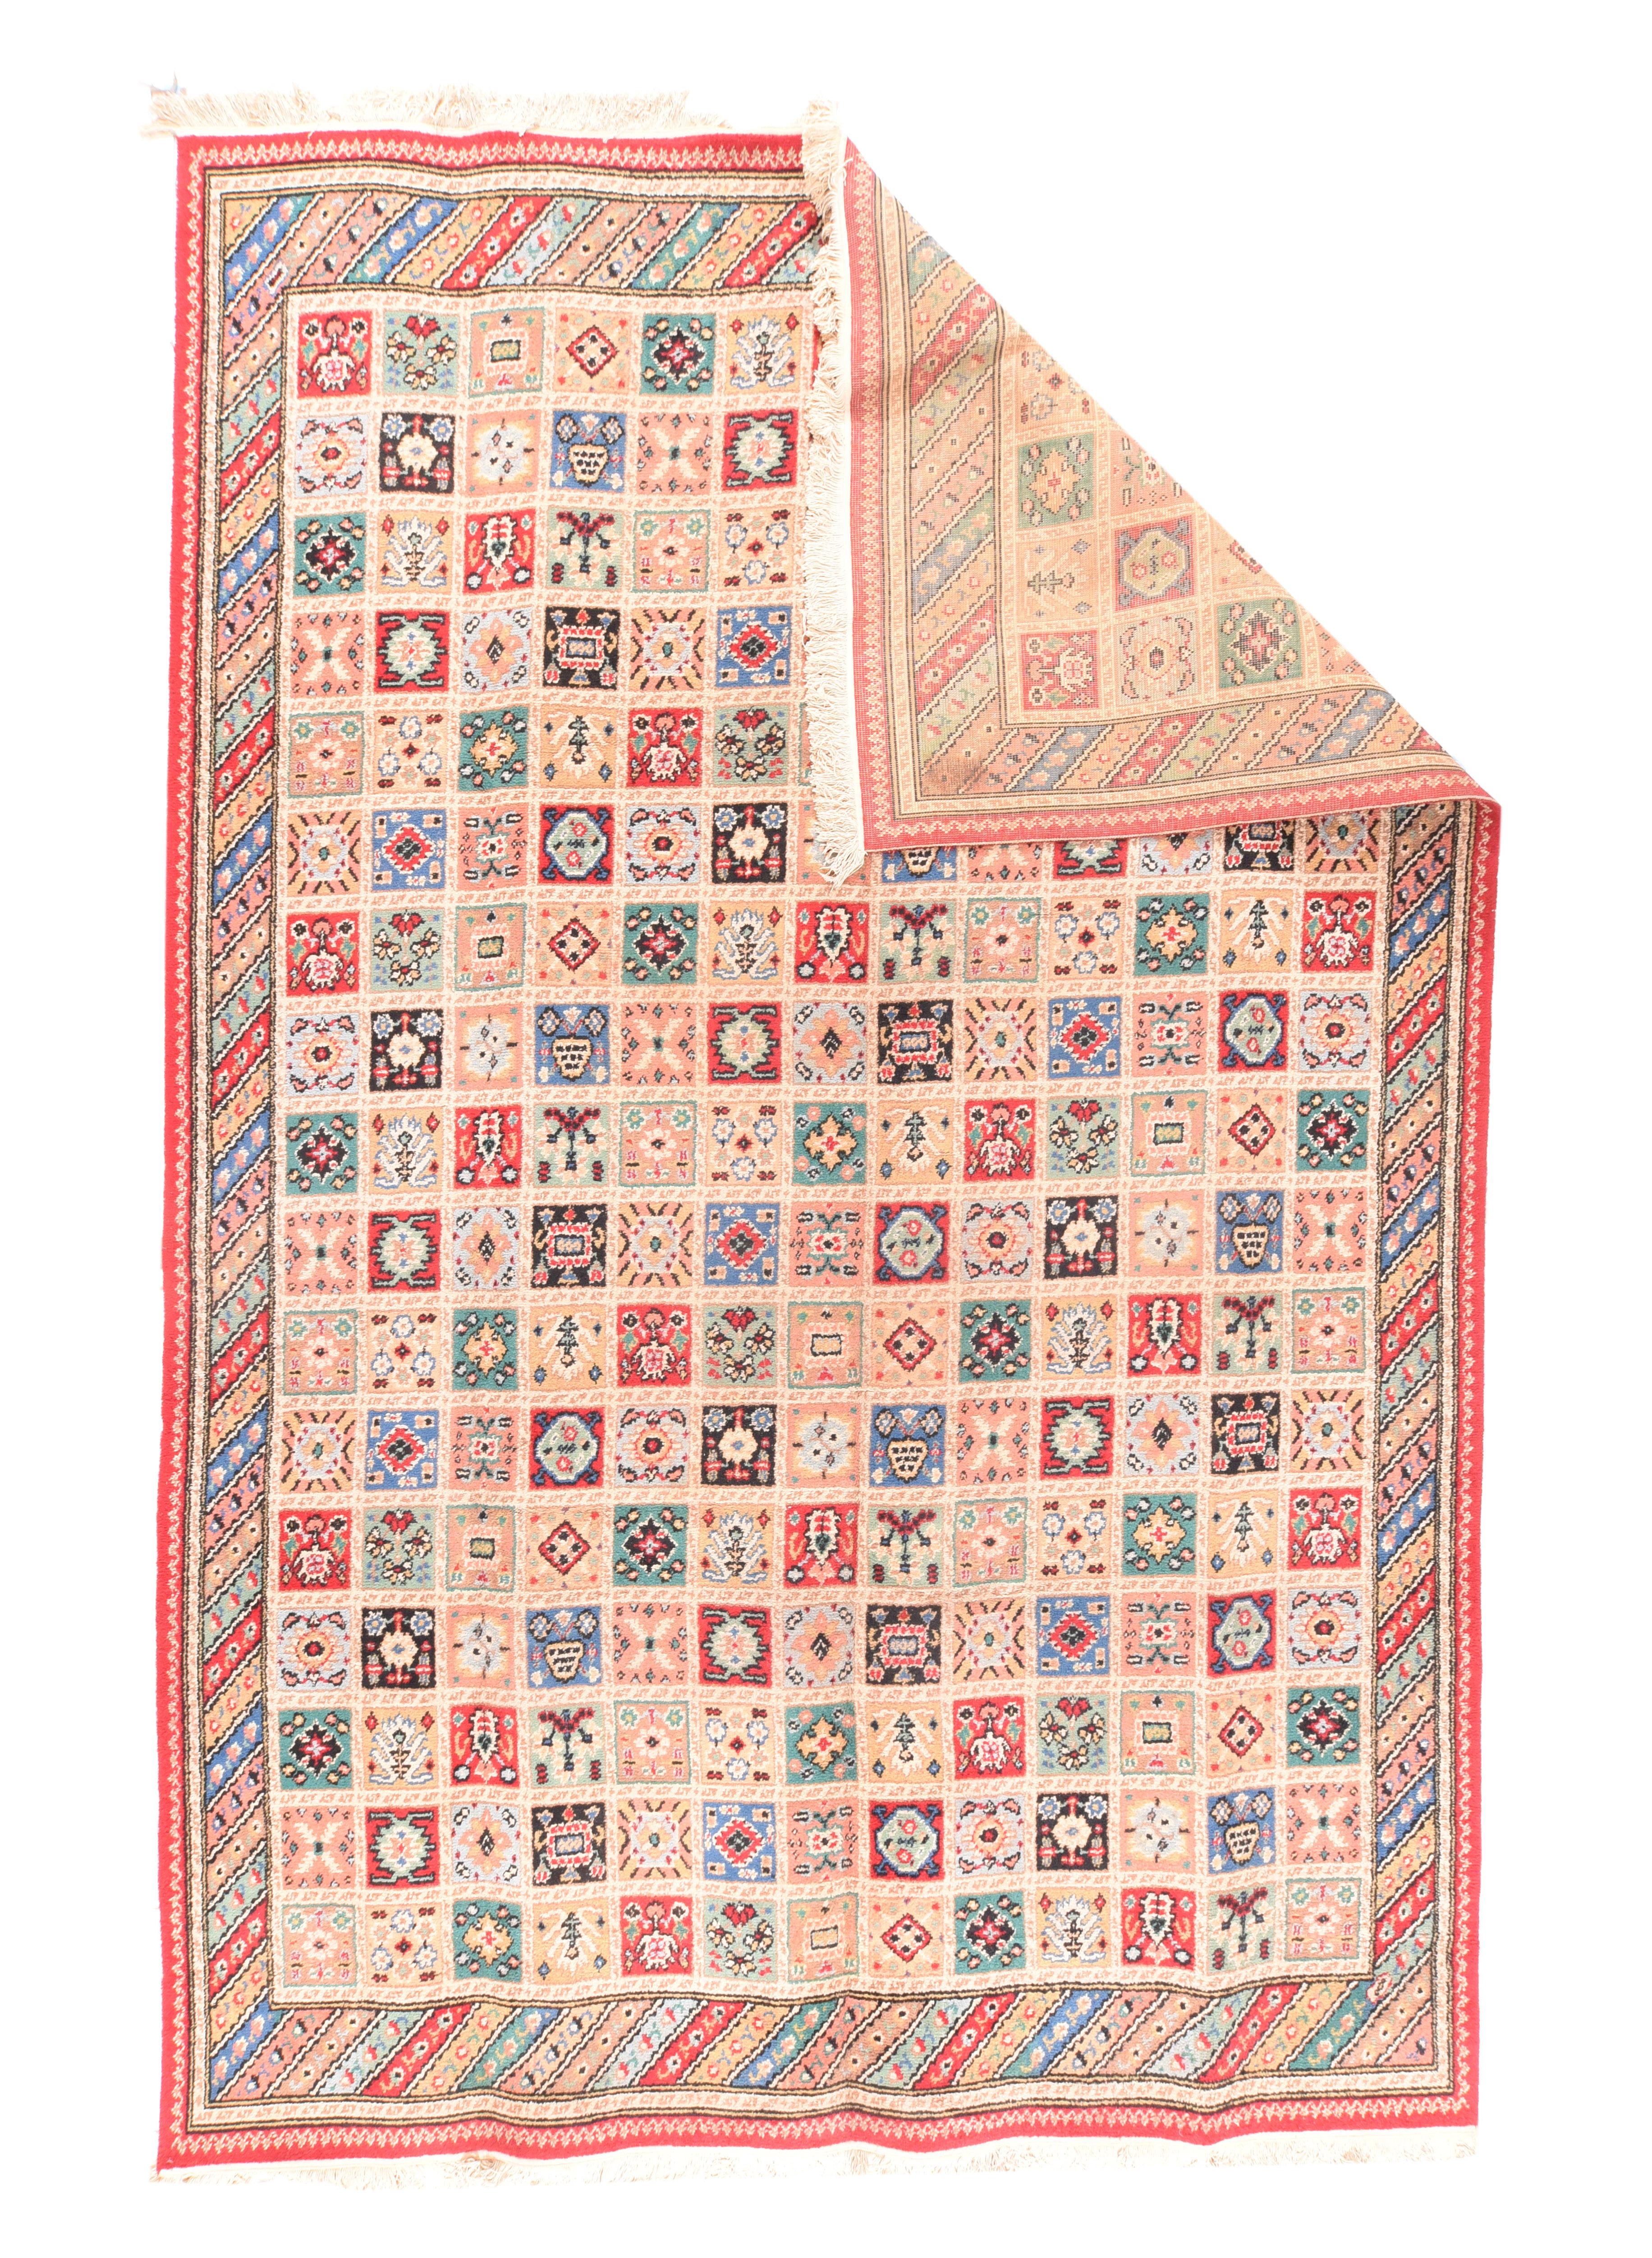 Fine Vintage European rug. Measures: 8'3'' x 11'6''. This hyper-elaborated 